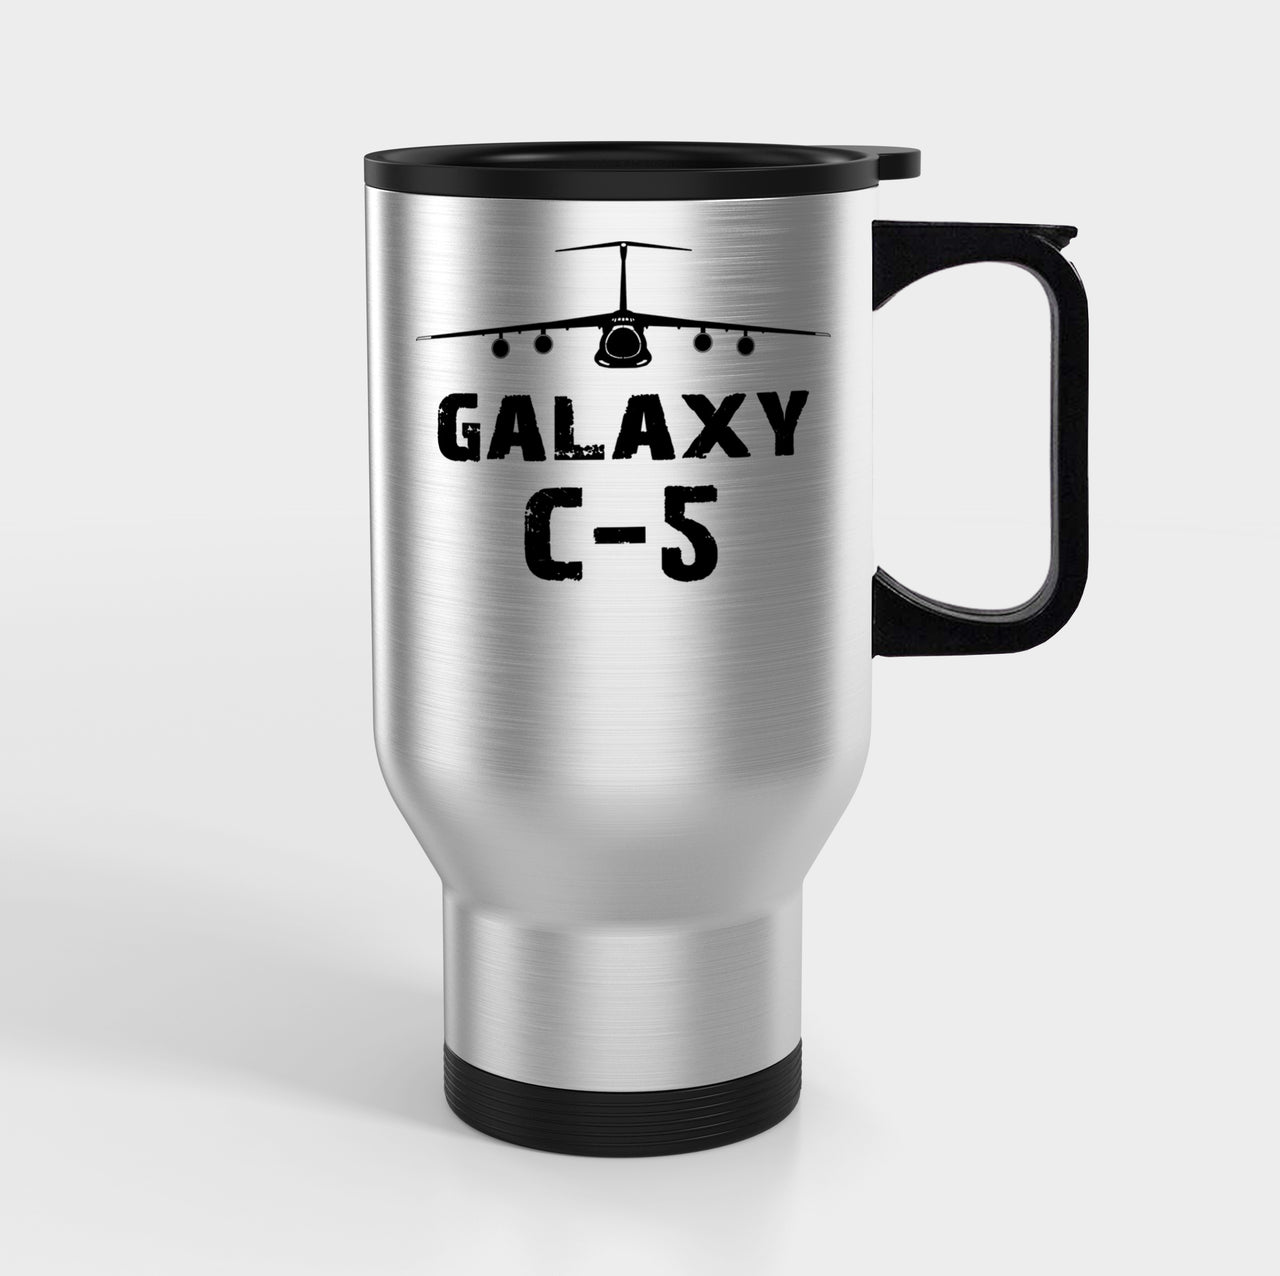 Galaxy C-5 & Plane Designed Travel Mugs (With Holder)